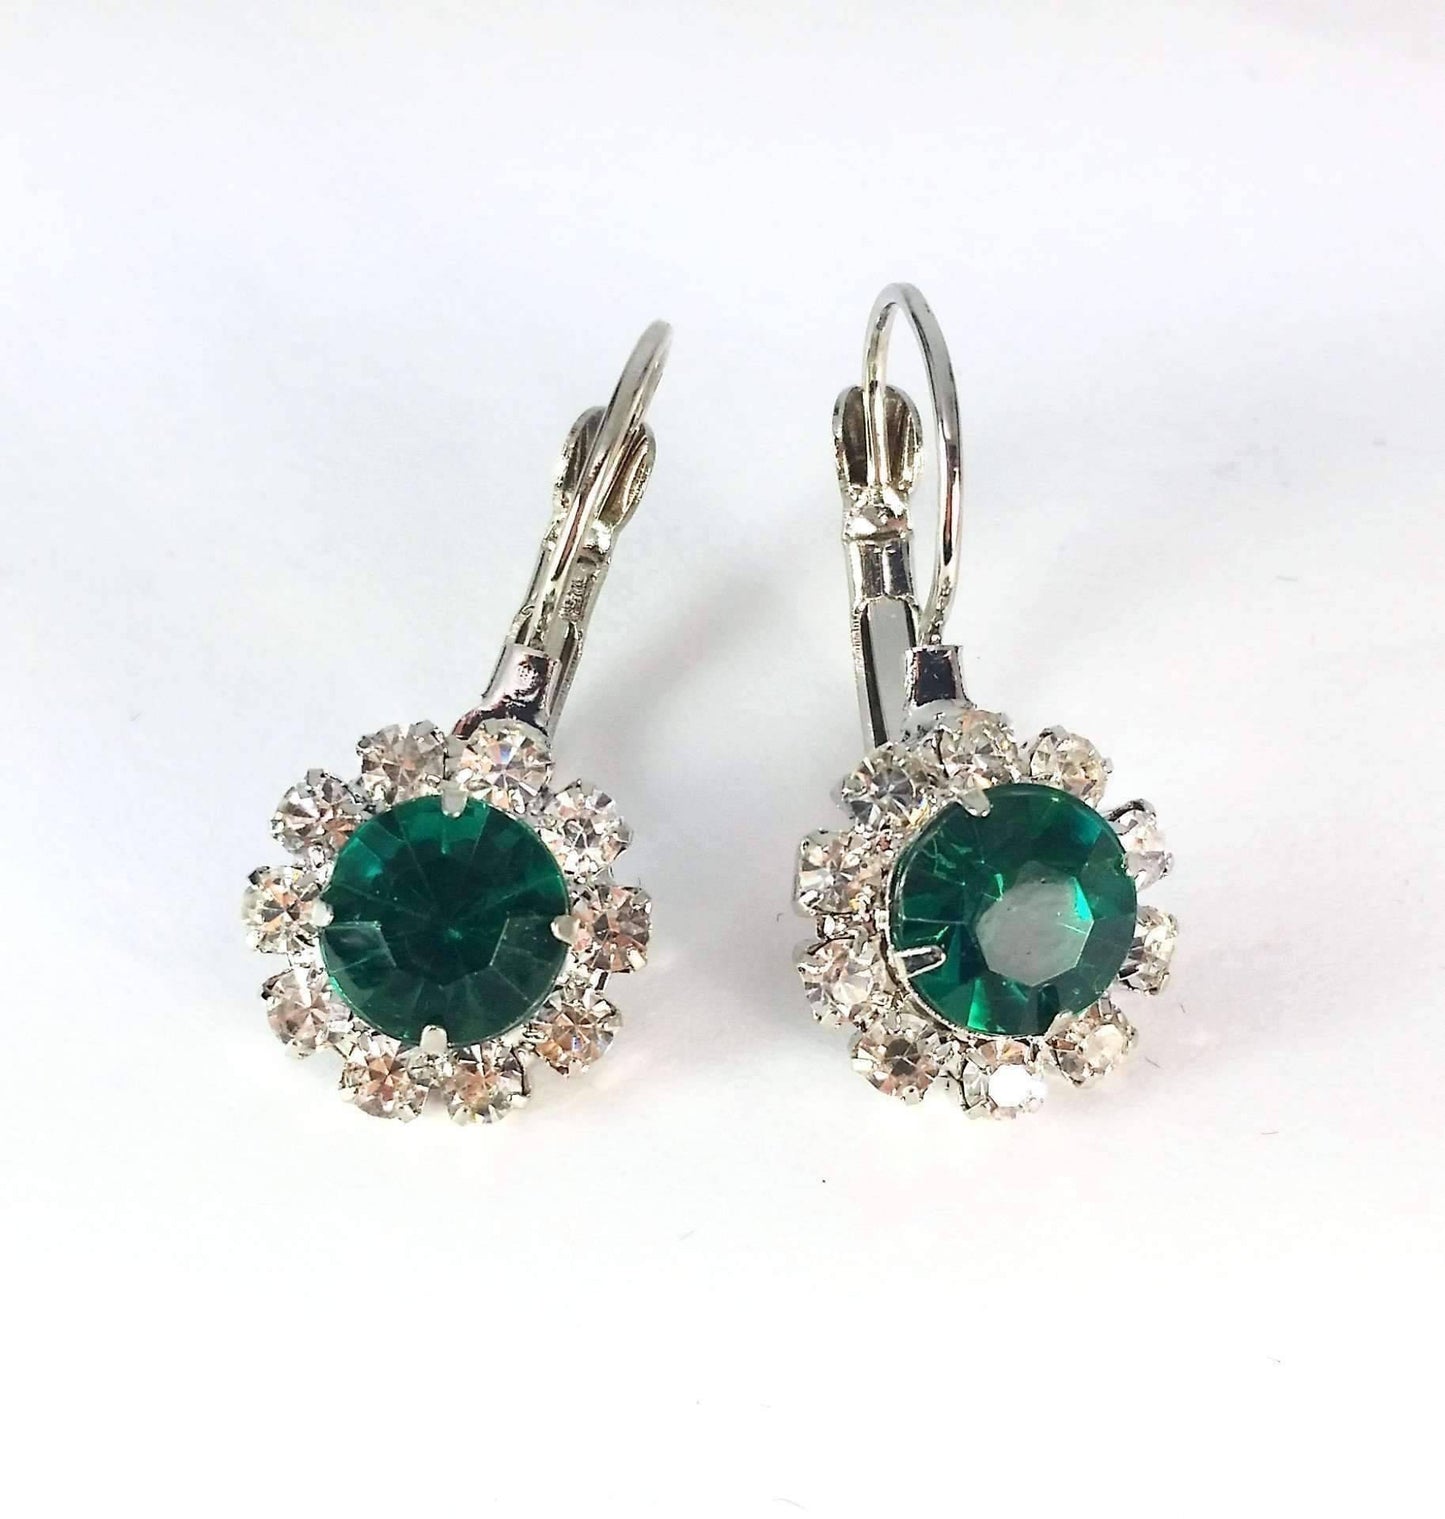 Feshionn IOBI Earrings White Gold Emerald Crystal Flower Drop Lever Back Earrings - White or Yellow Gold